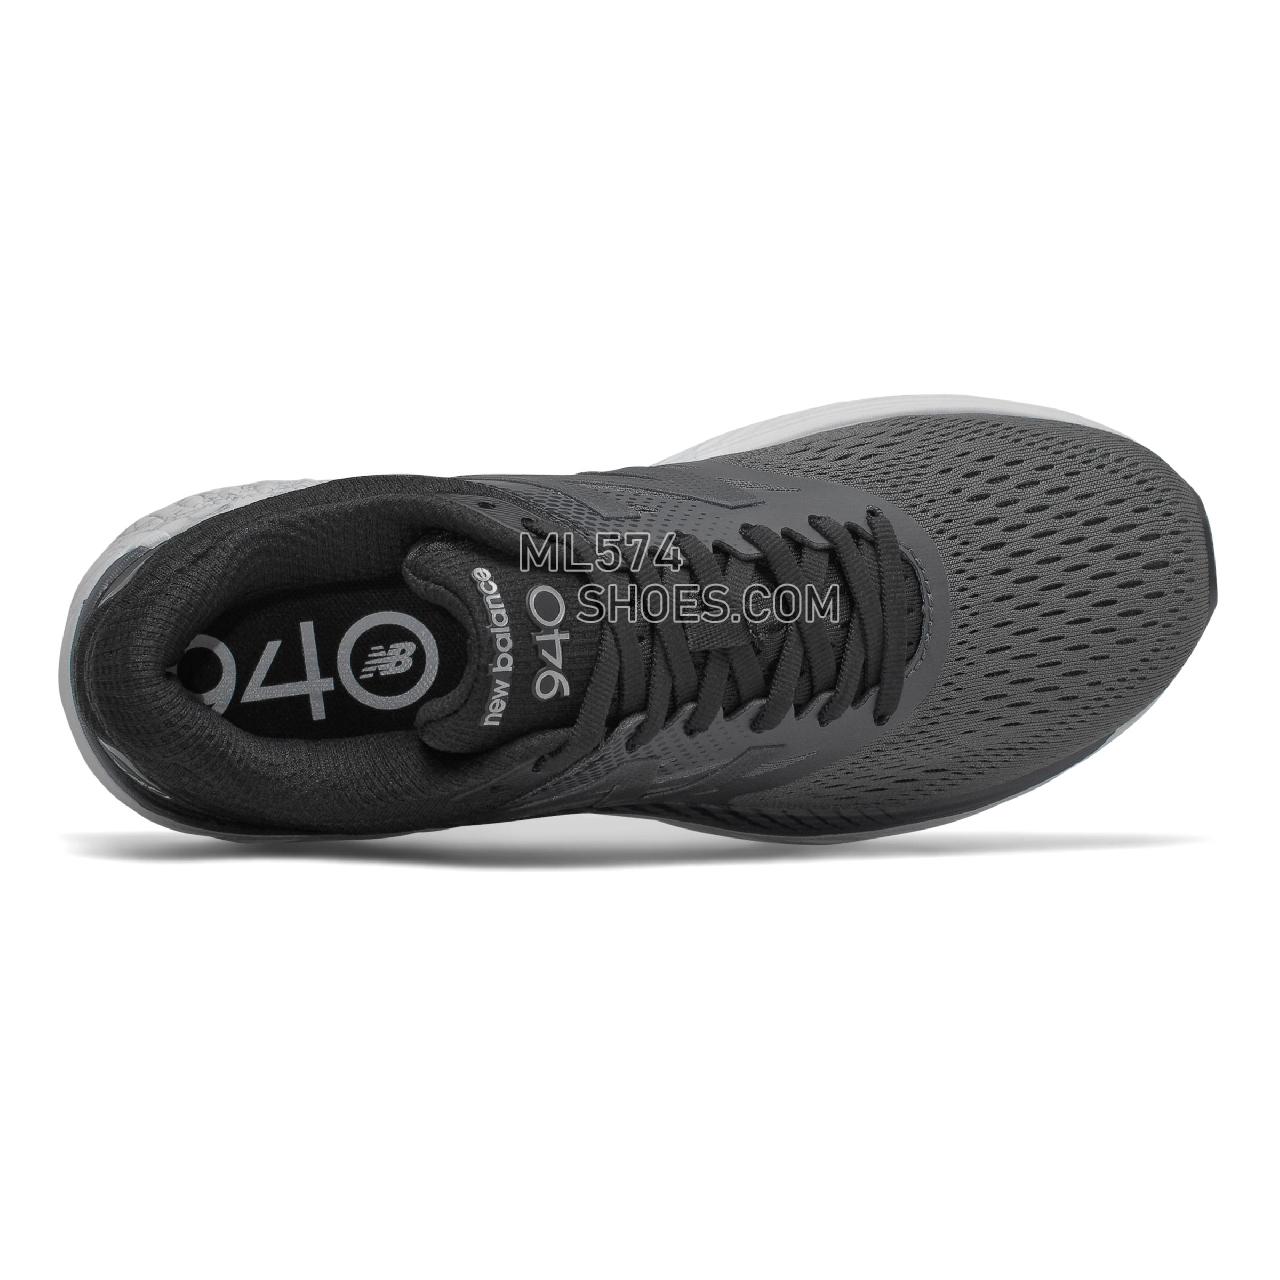 New Balance 940v4 - Women's Stability Running - Black with Magnet - W940GK4